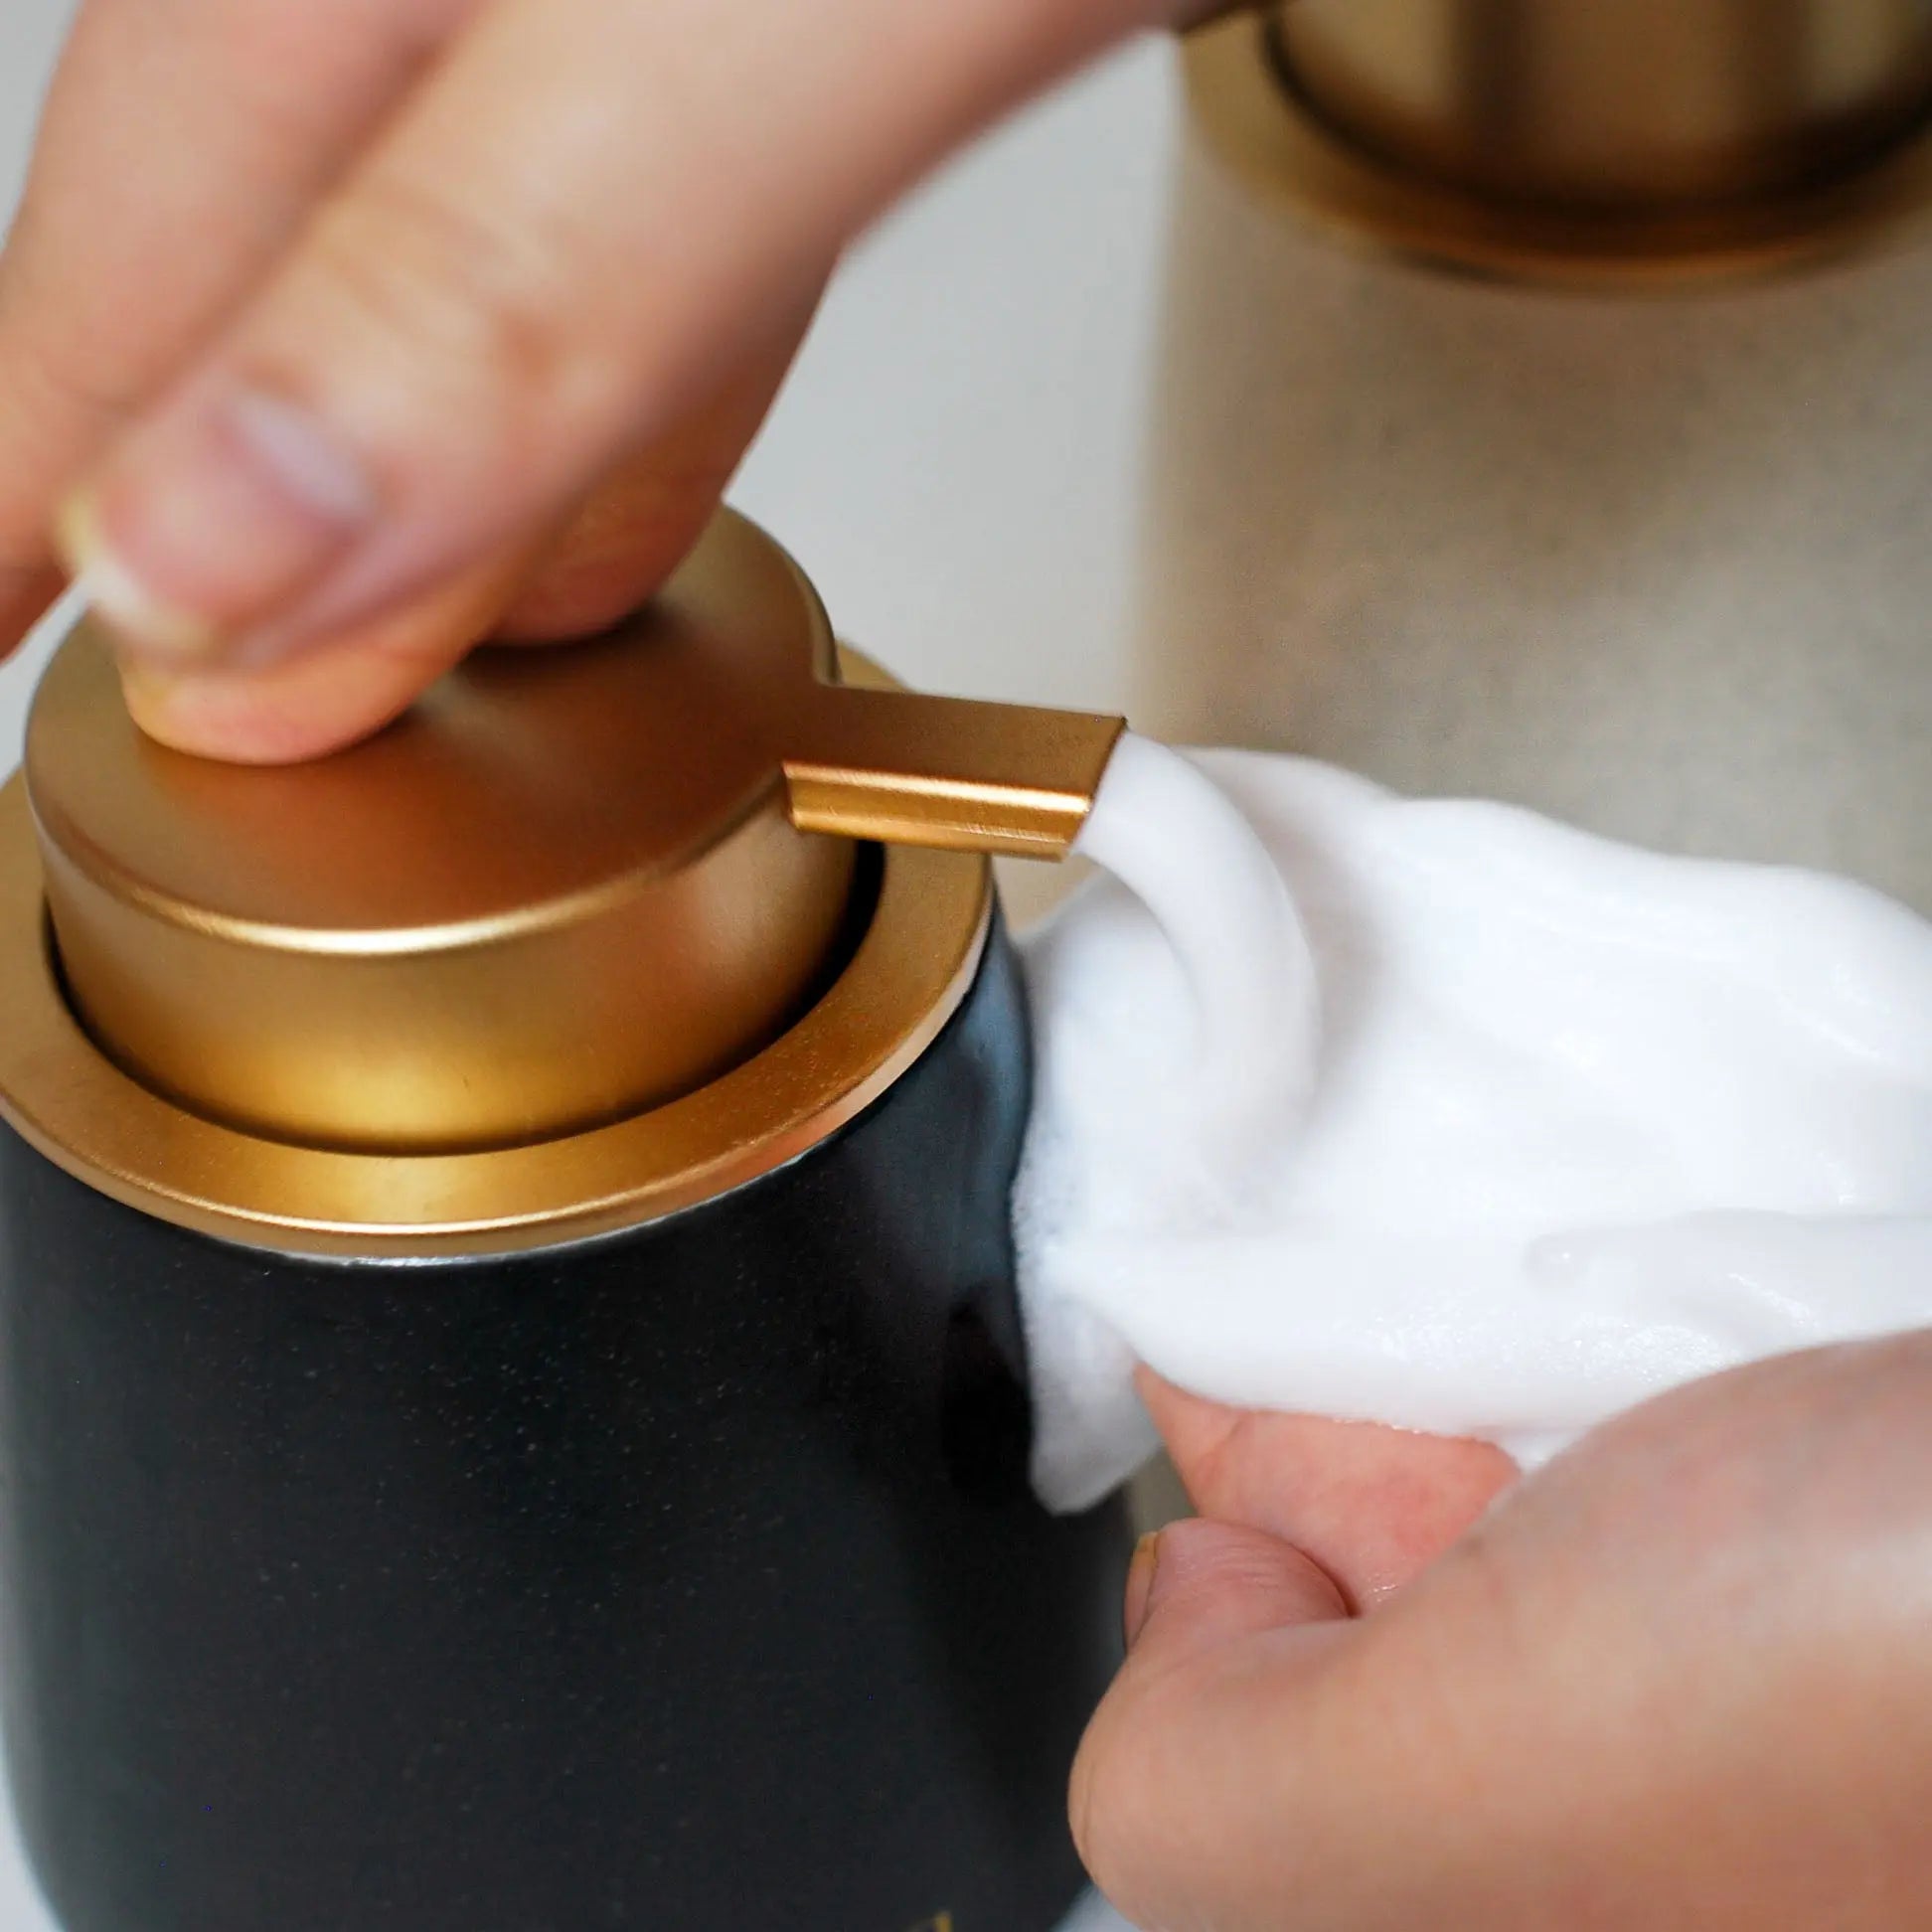 Handwash foam solution that is moisturising to your hands